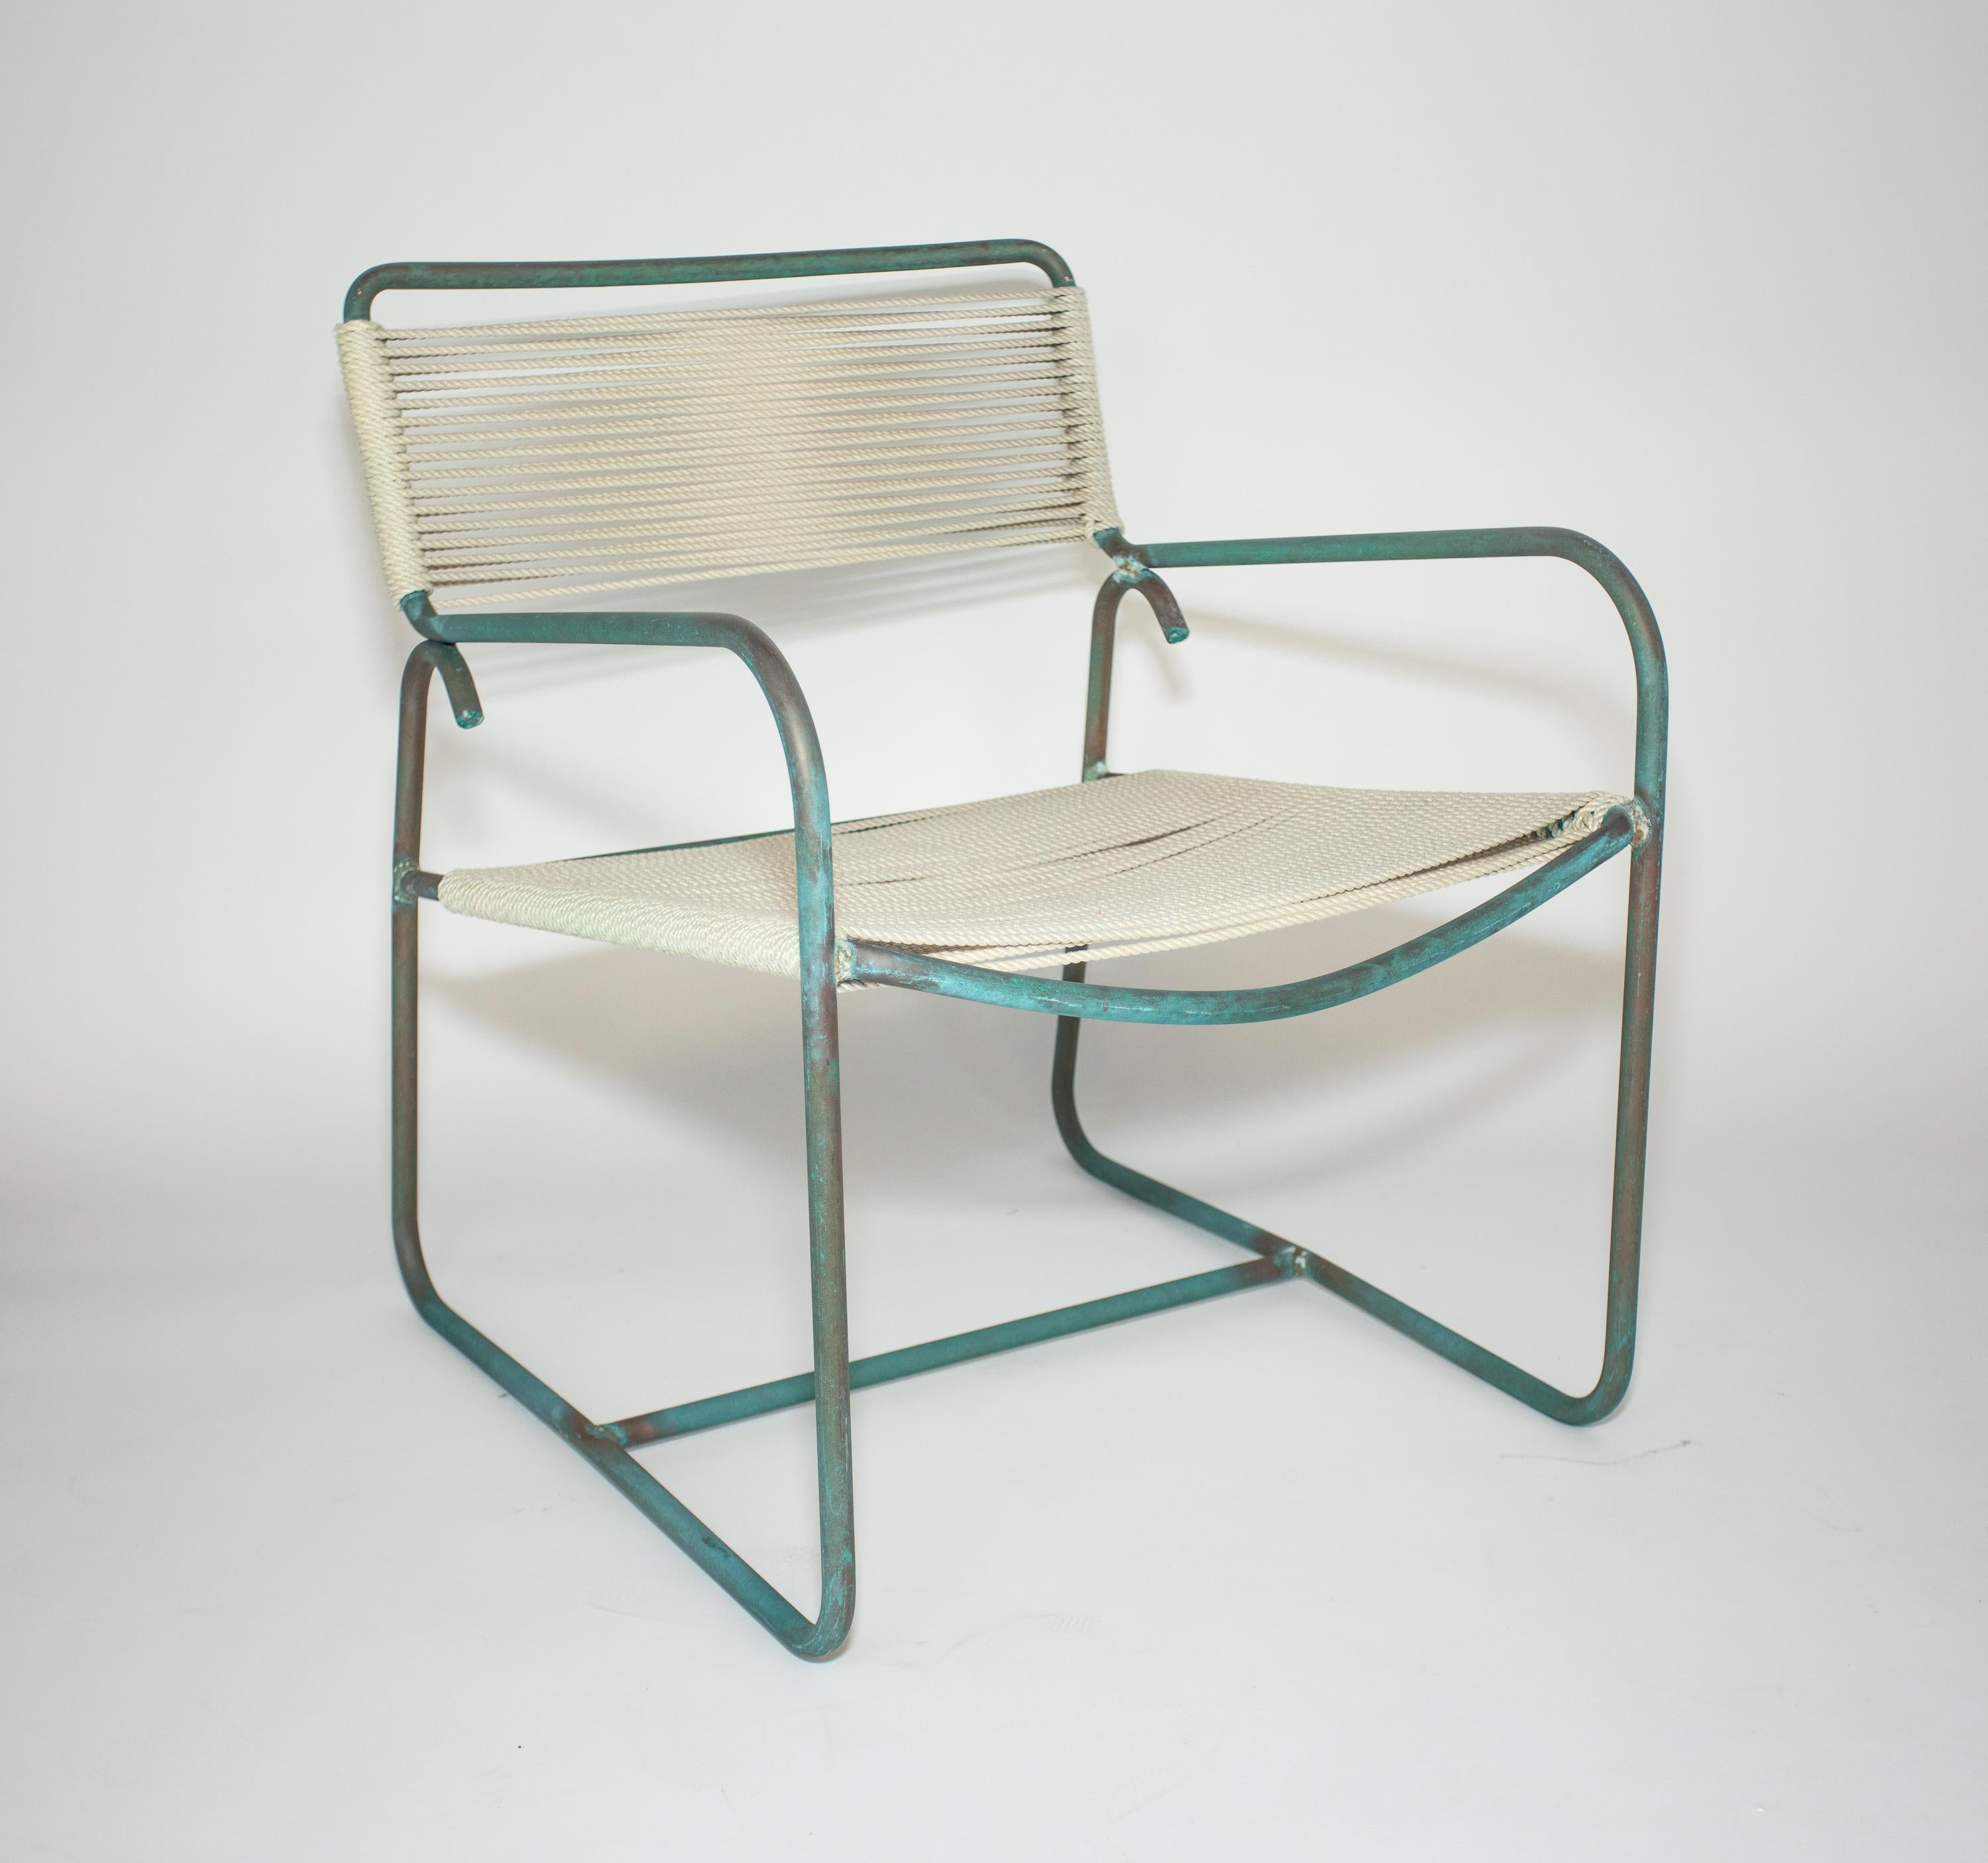 Walter Lamb Bronze and Rope Lounge Chair
Manufactured by Brown Jordan
Beautiful natural patina